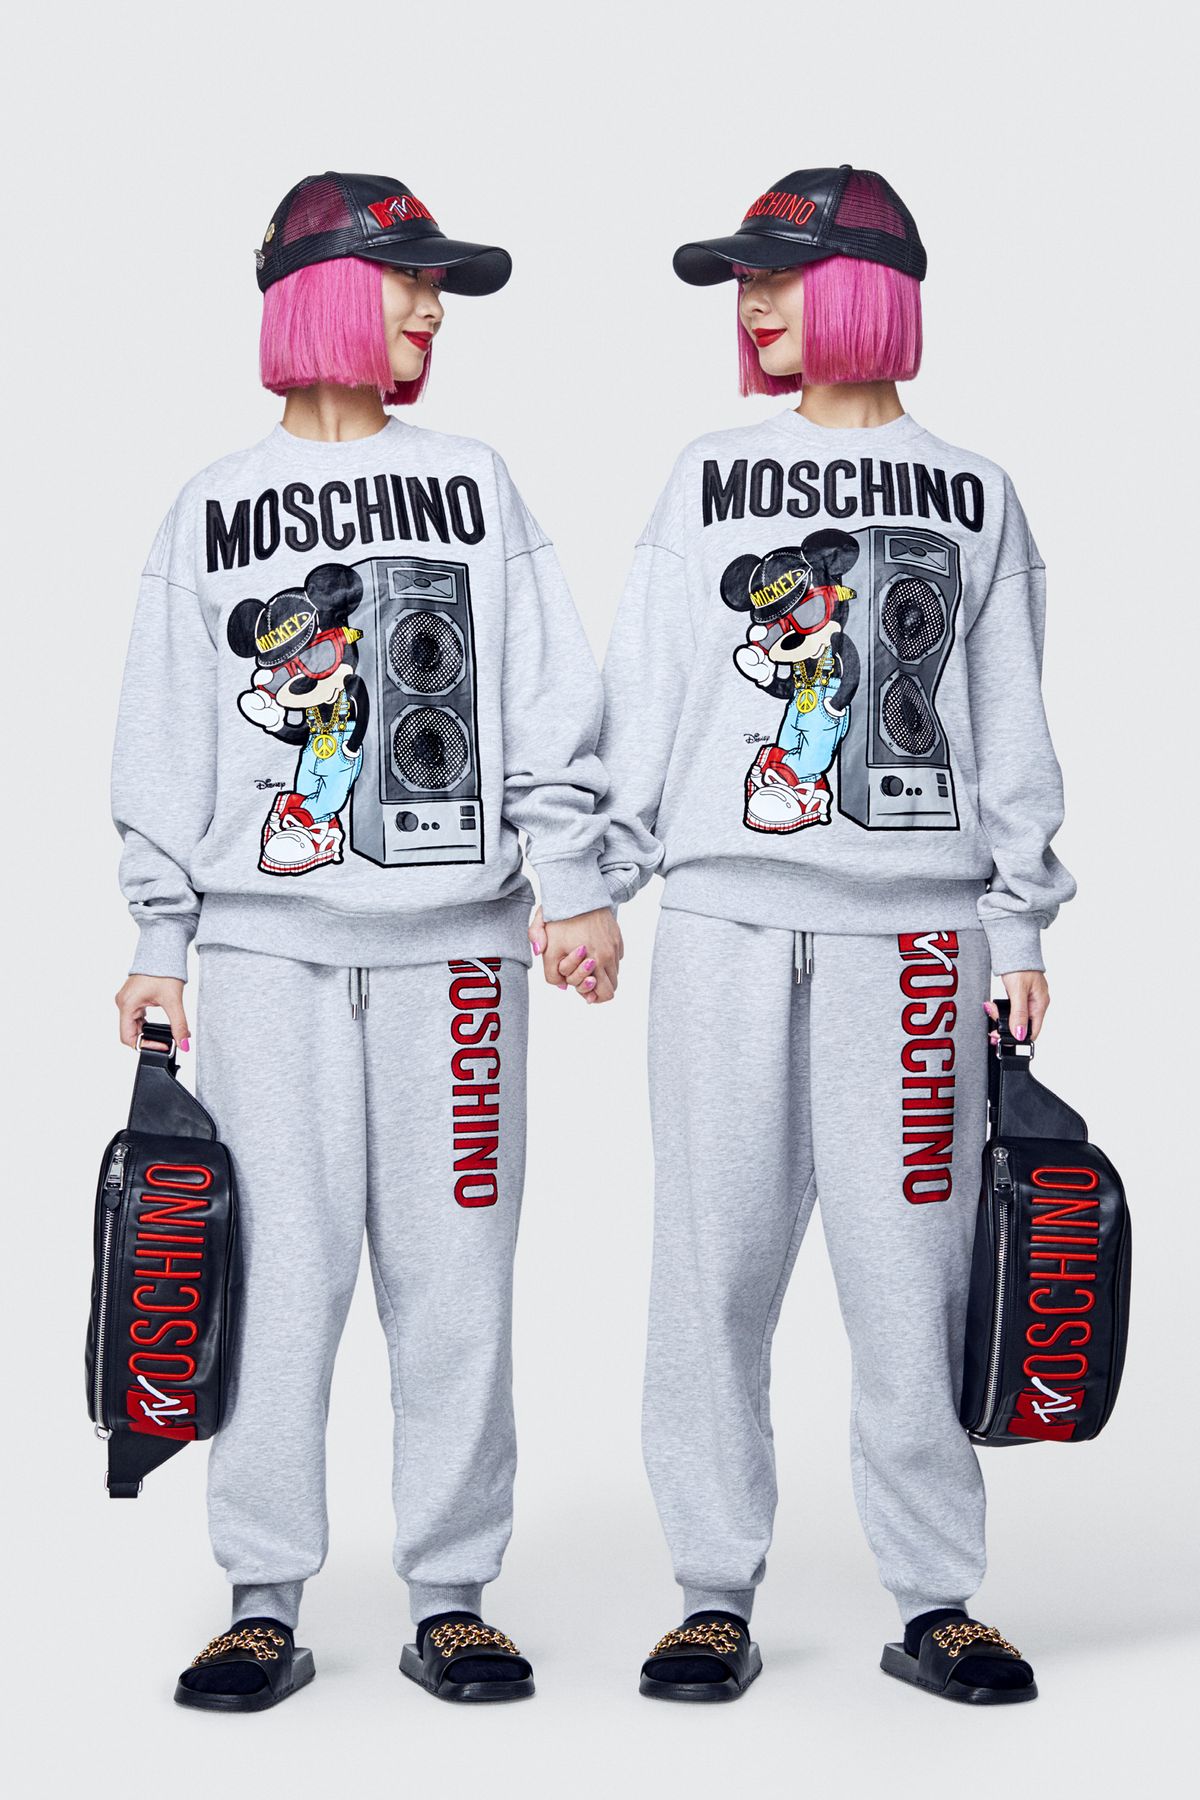 Moschino X H&M Fall 2018 Lookbook